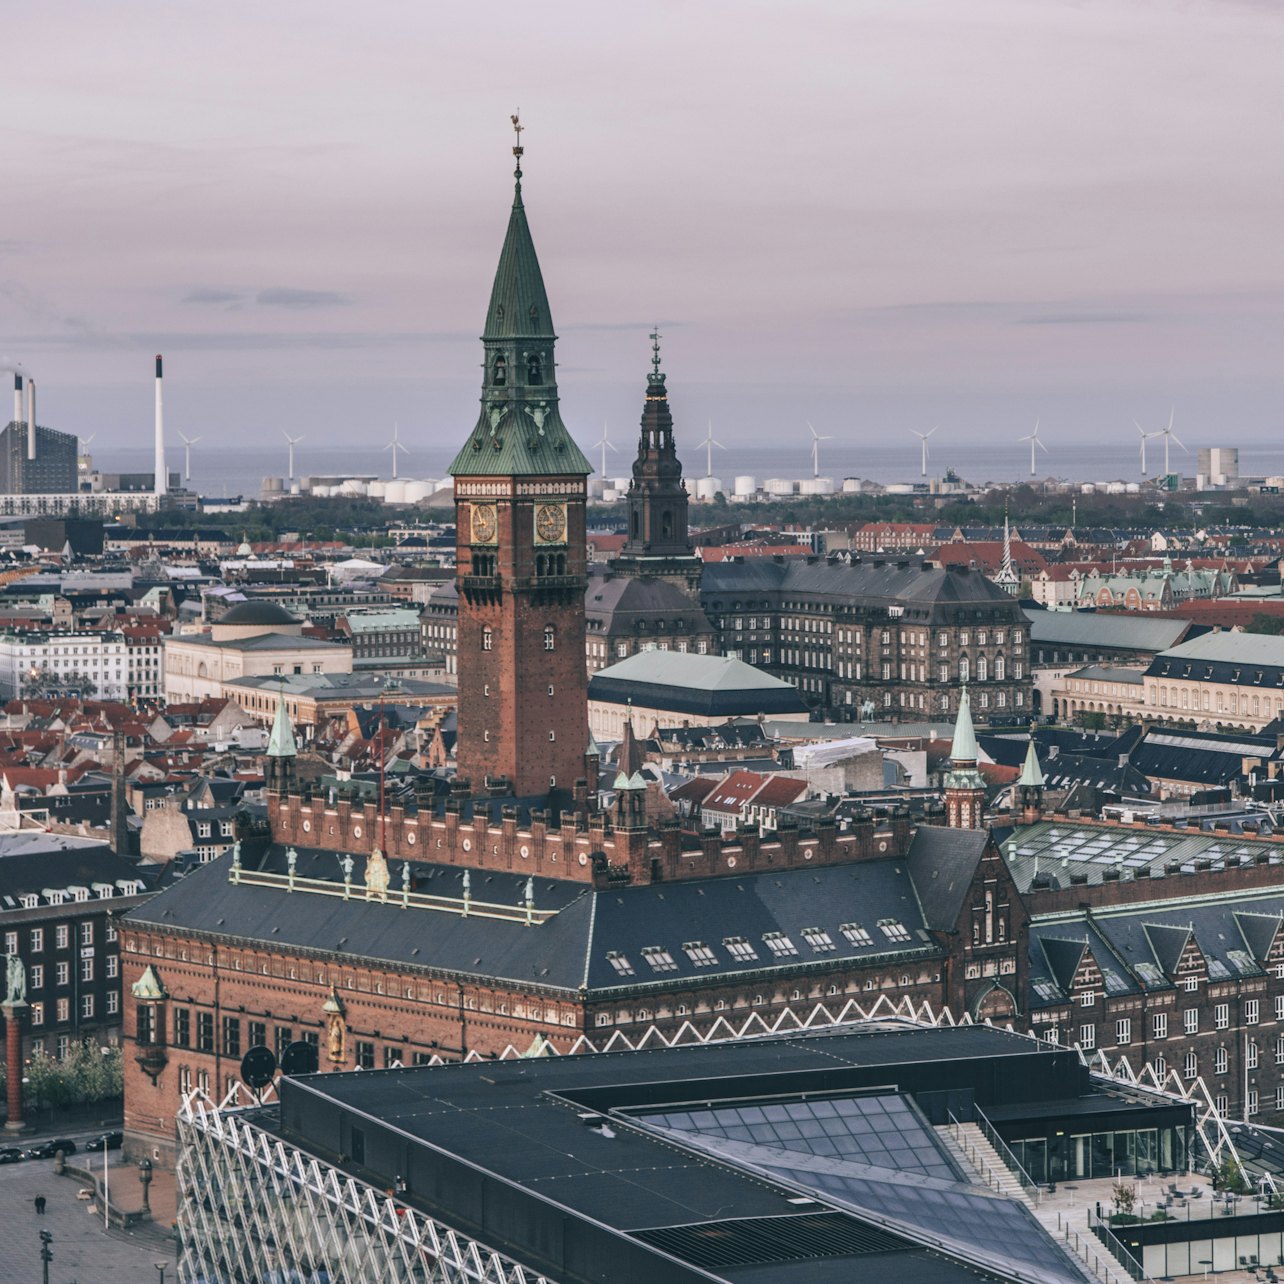 Copenhagen City Hall: Guided Tour - Accommodations in Copenhagen